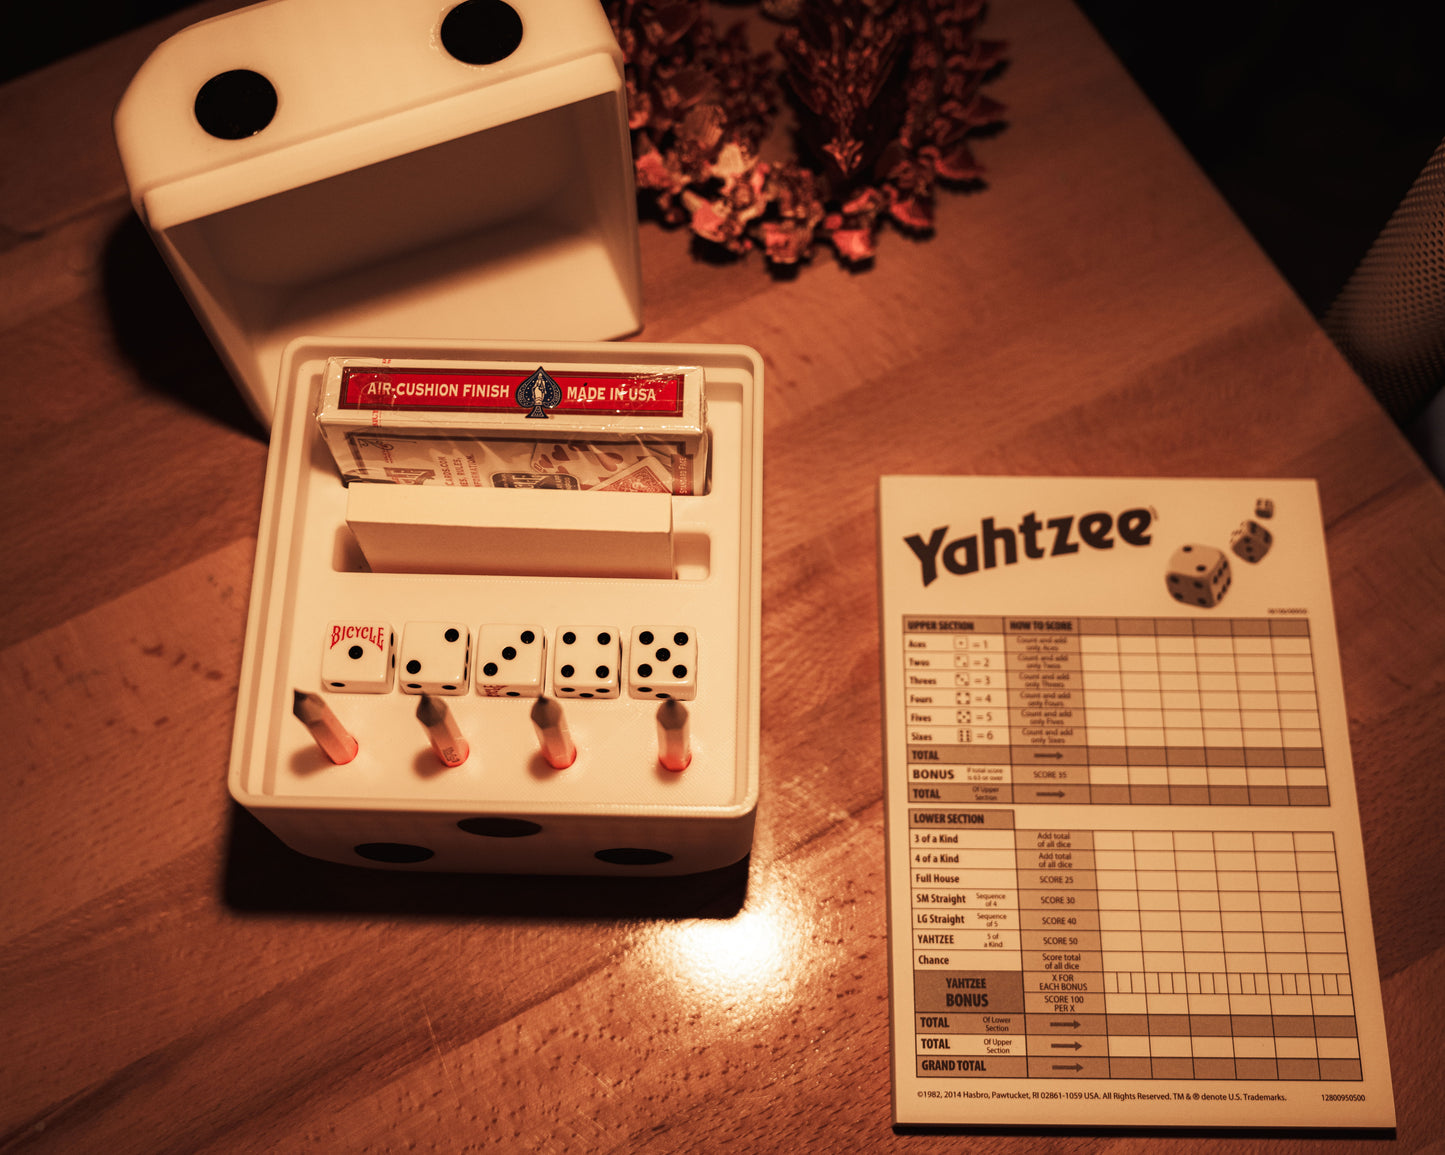 Game Cube - Dice, Cards, Yahtzee